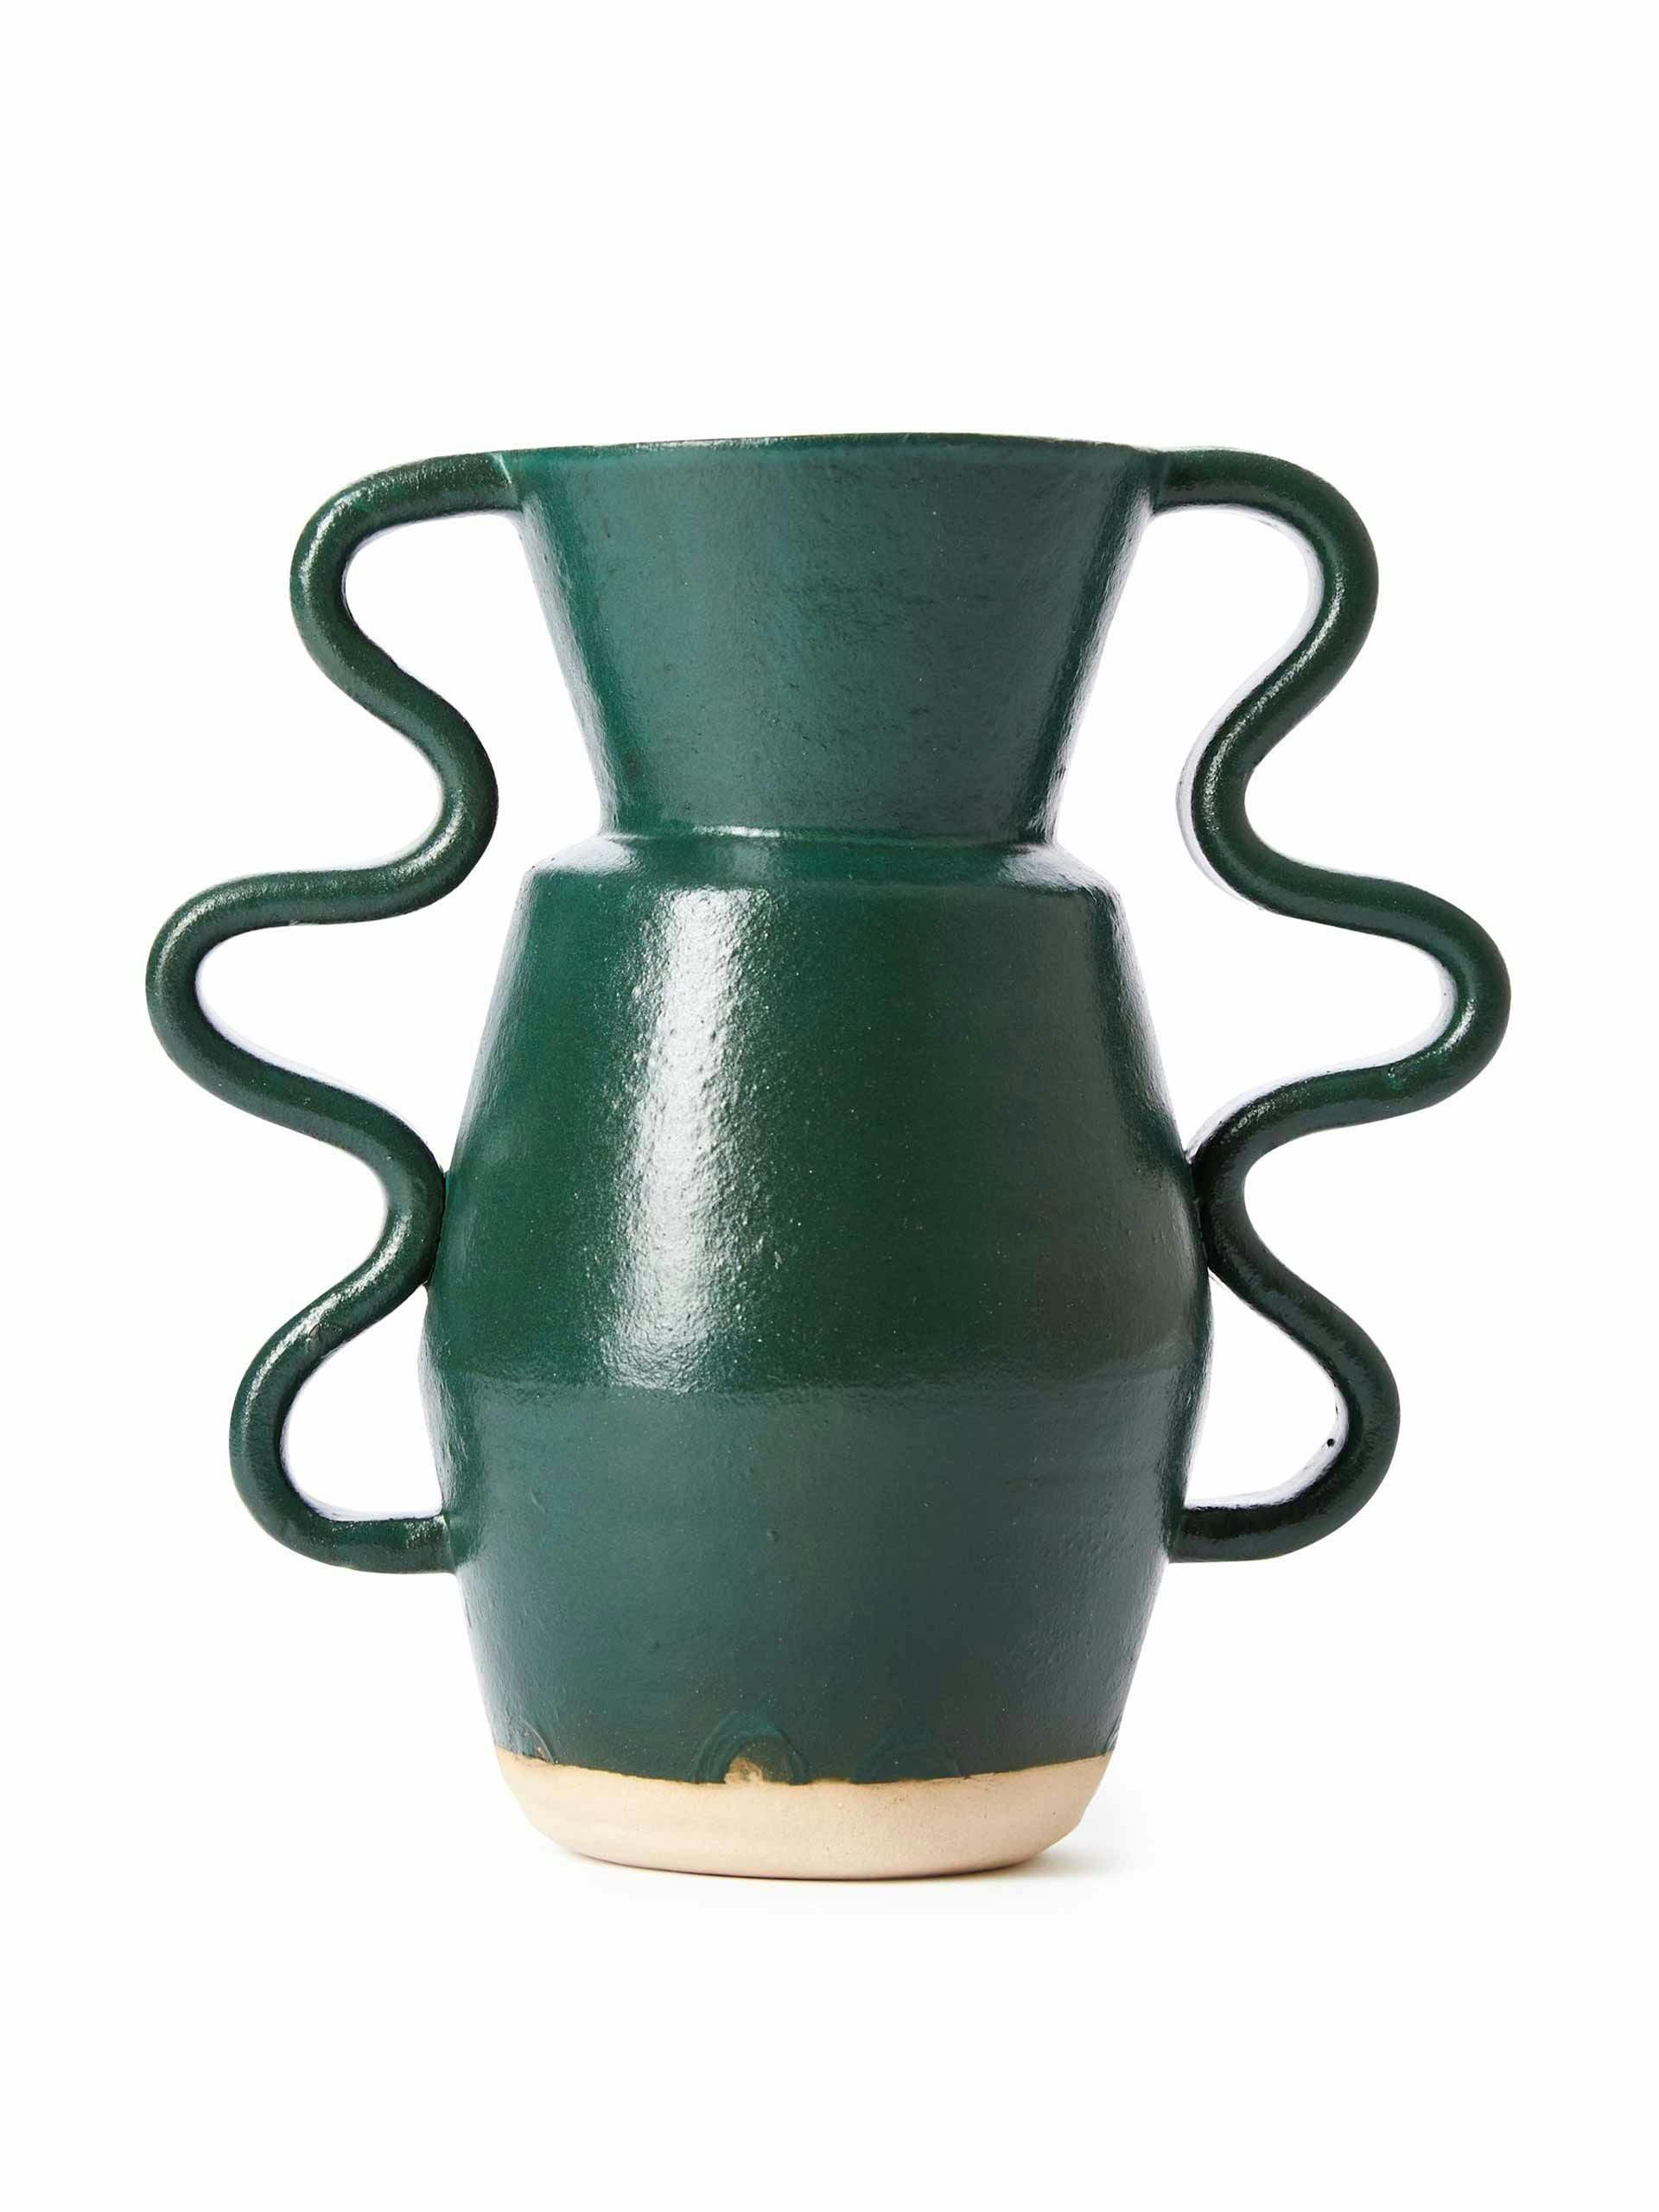 Handcrafted vase